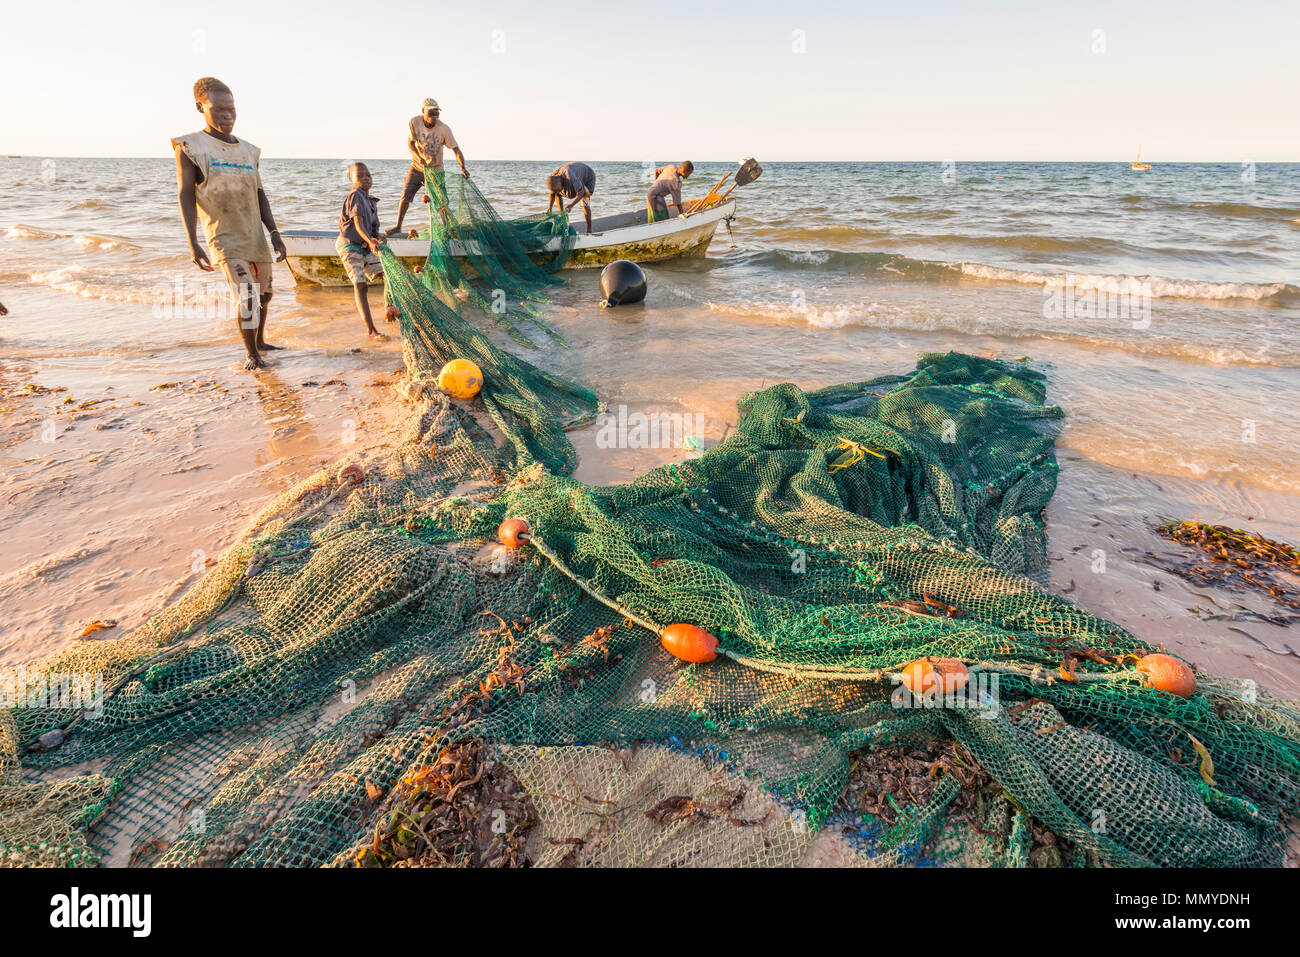 Pesca artesanal fotografías e imágenes de alta resolución - Alamy